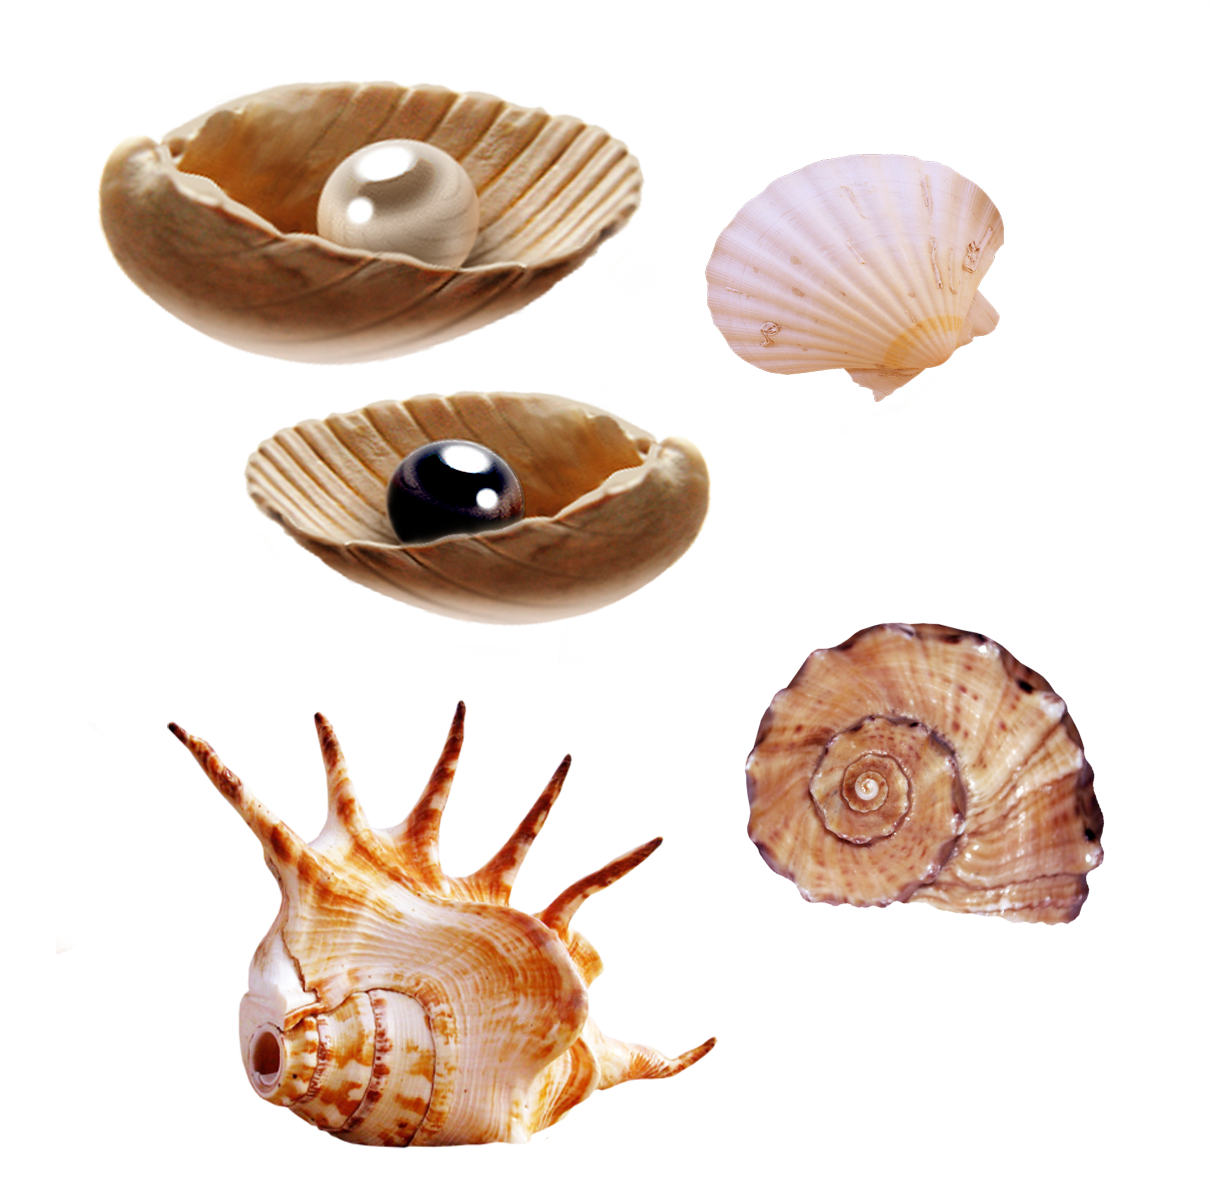 pearl clipart shell sea pearl